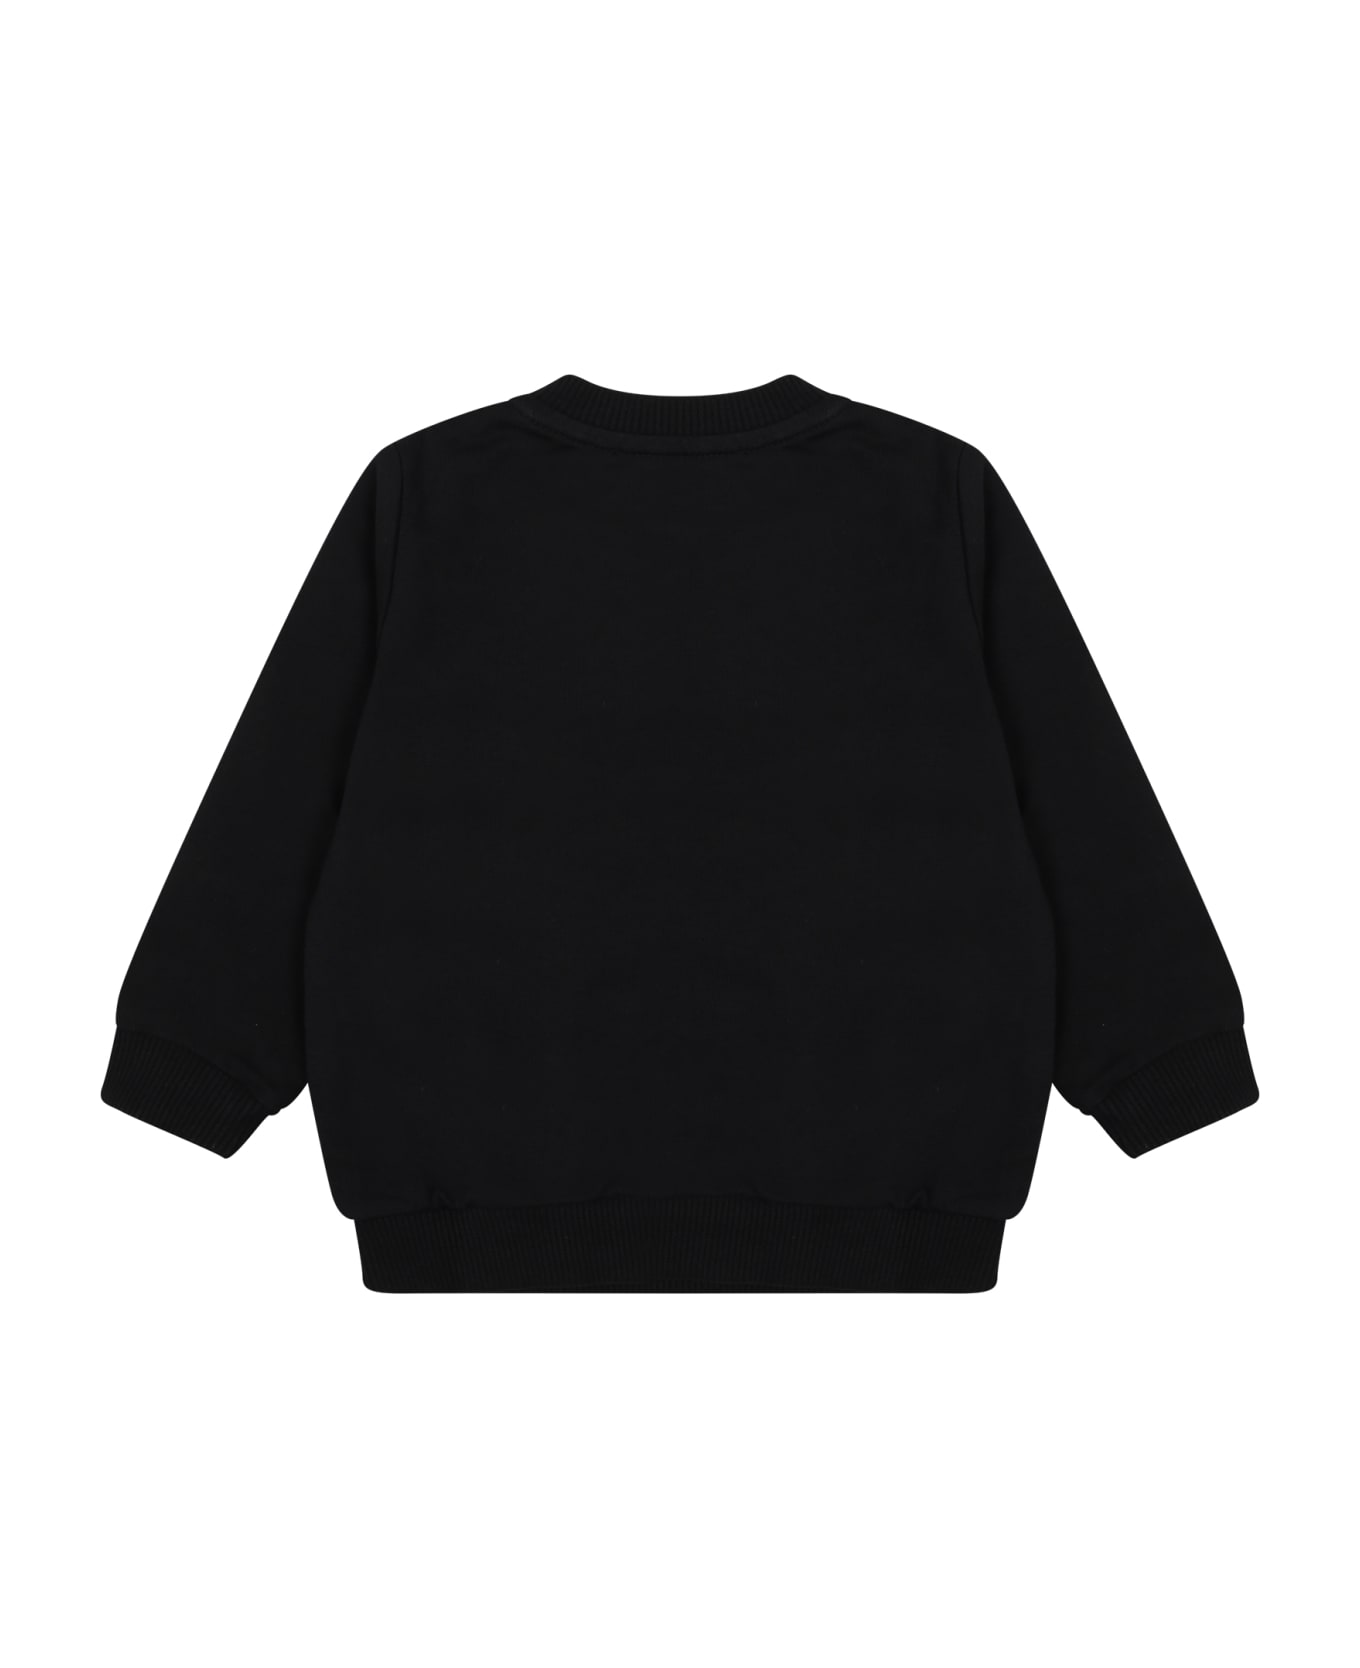 Moschino Black Sweatshirt For Babies With Teddy Bears And Logo - Black